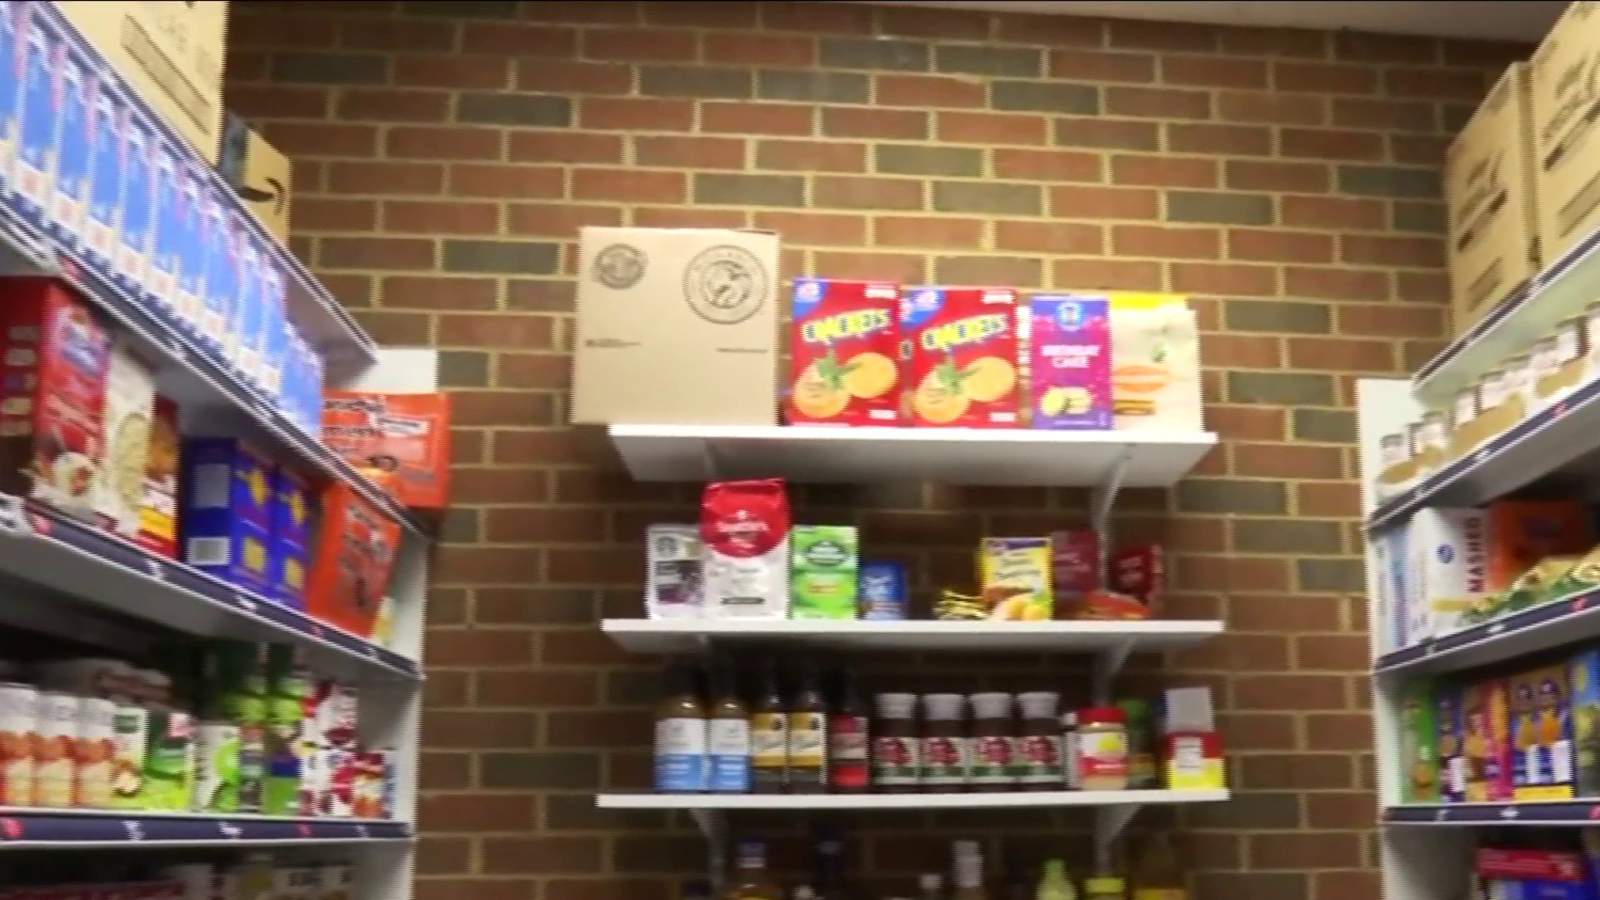 Roanoke gains new community food pantry